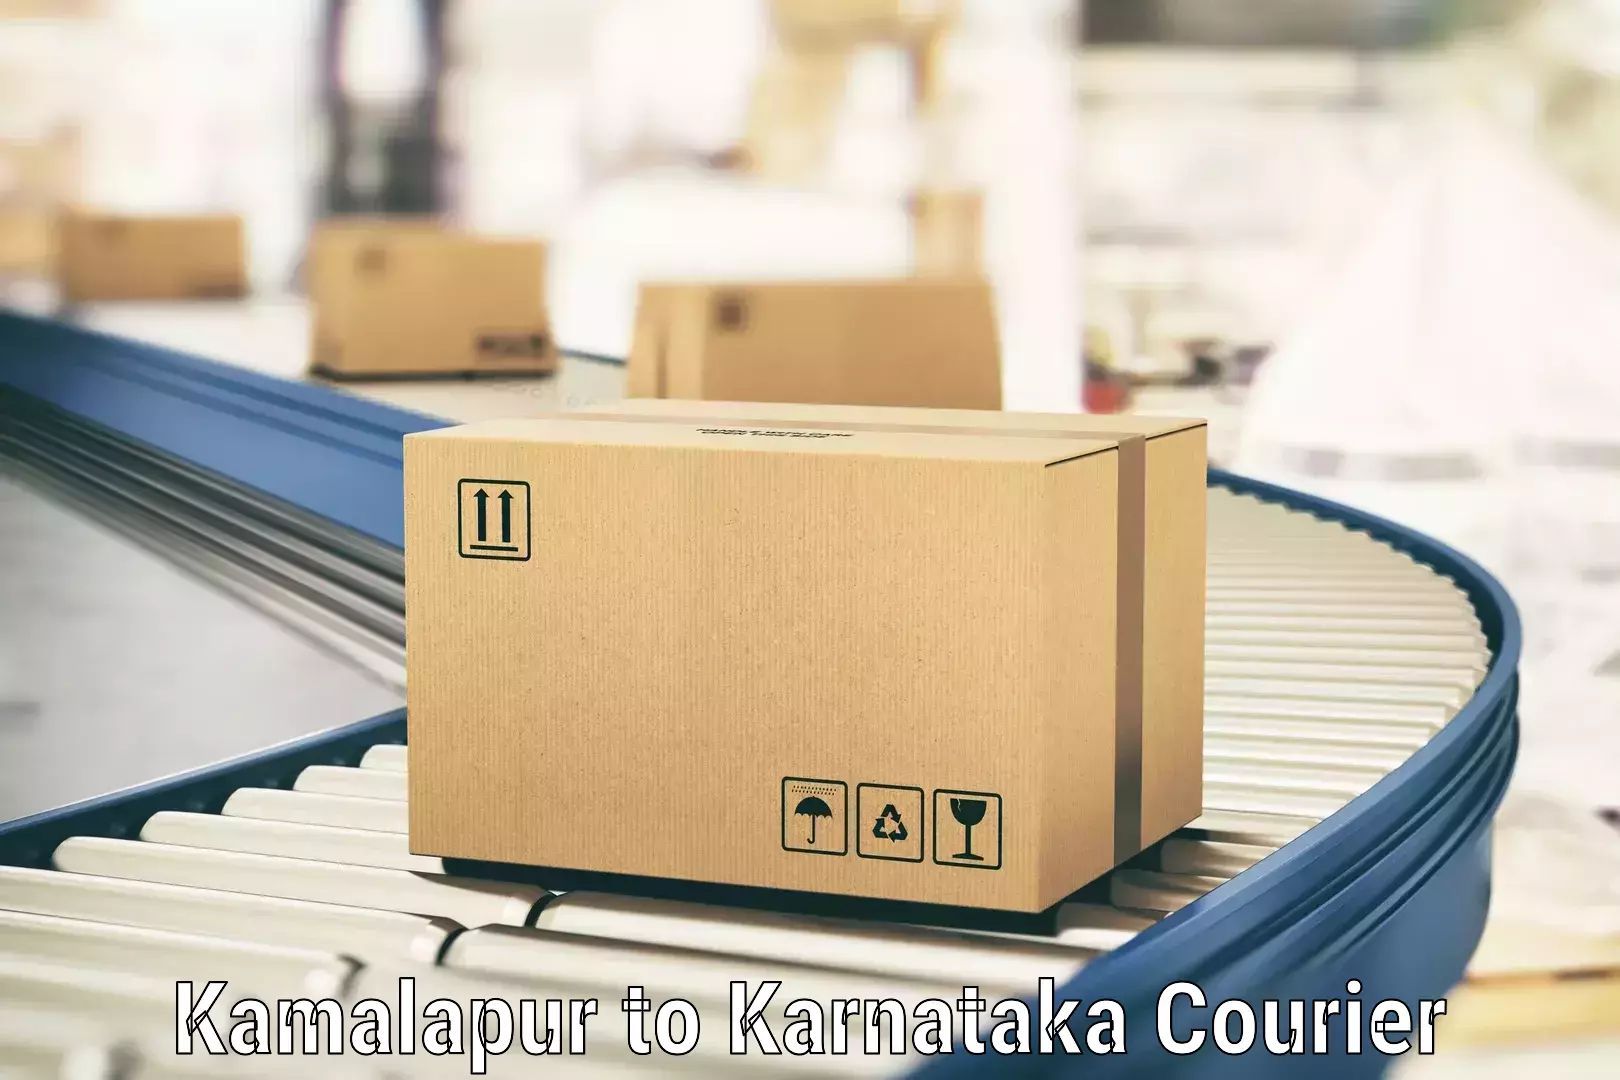 Full-service courier options Kamalapur to Bengaluru